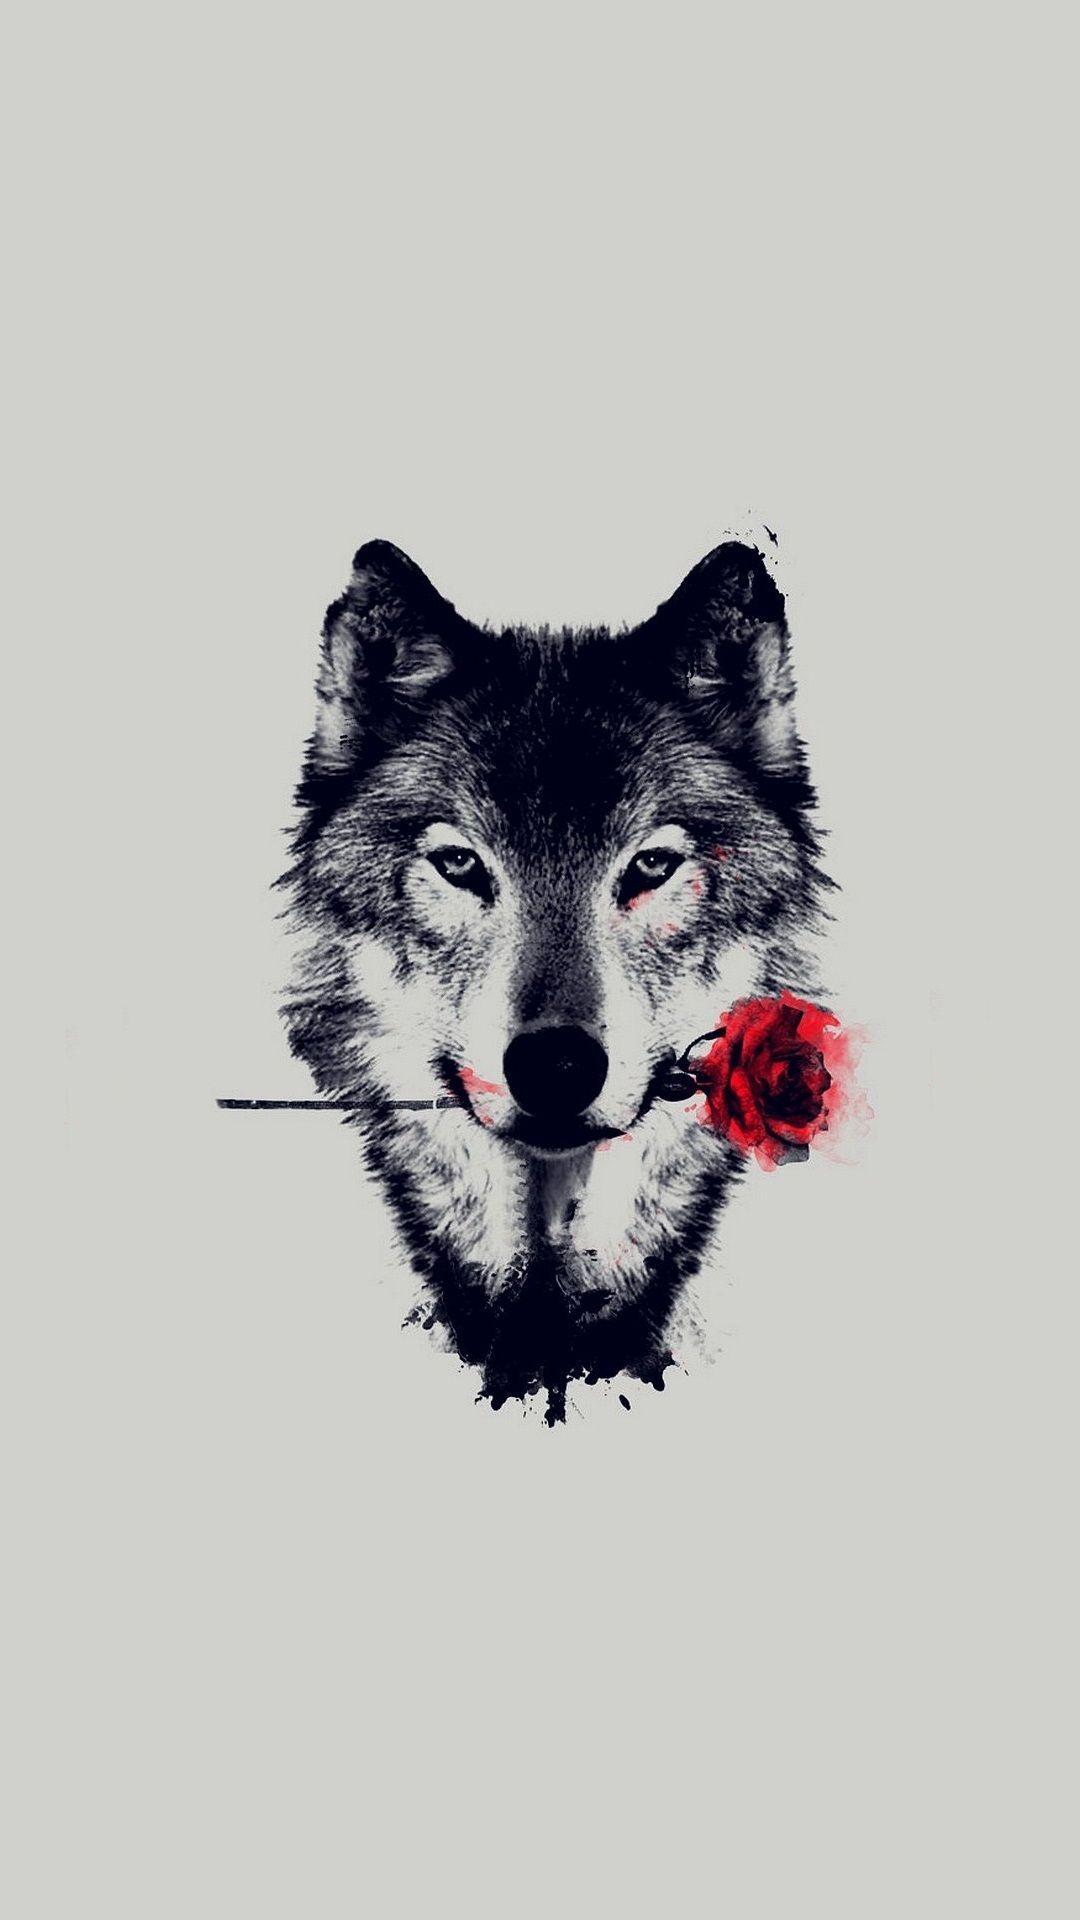 Wolf Red Rose Art Wallpaper iPhone iPhone Wallpaper. Rose